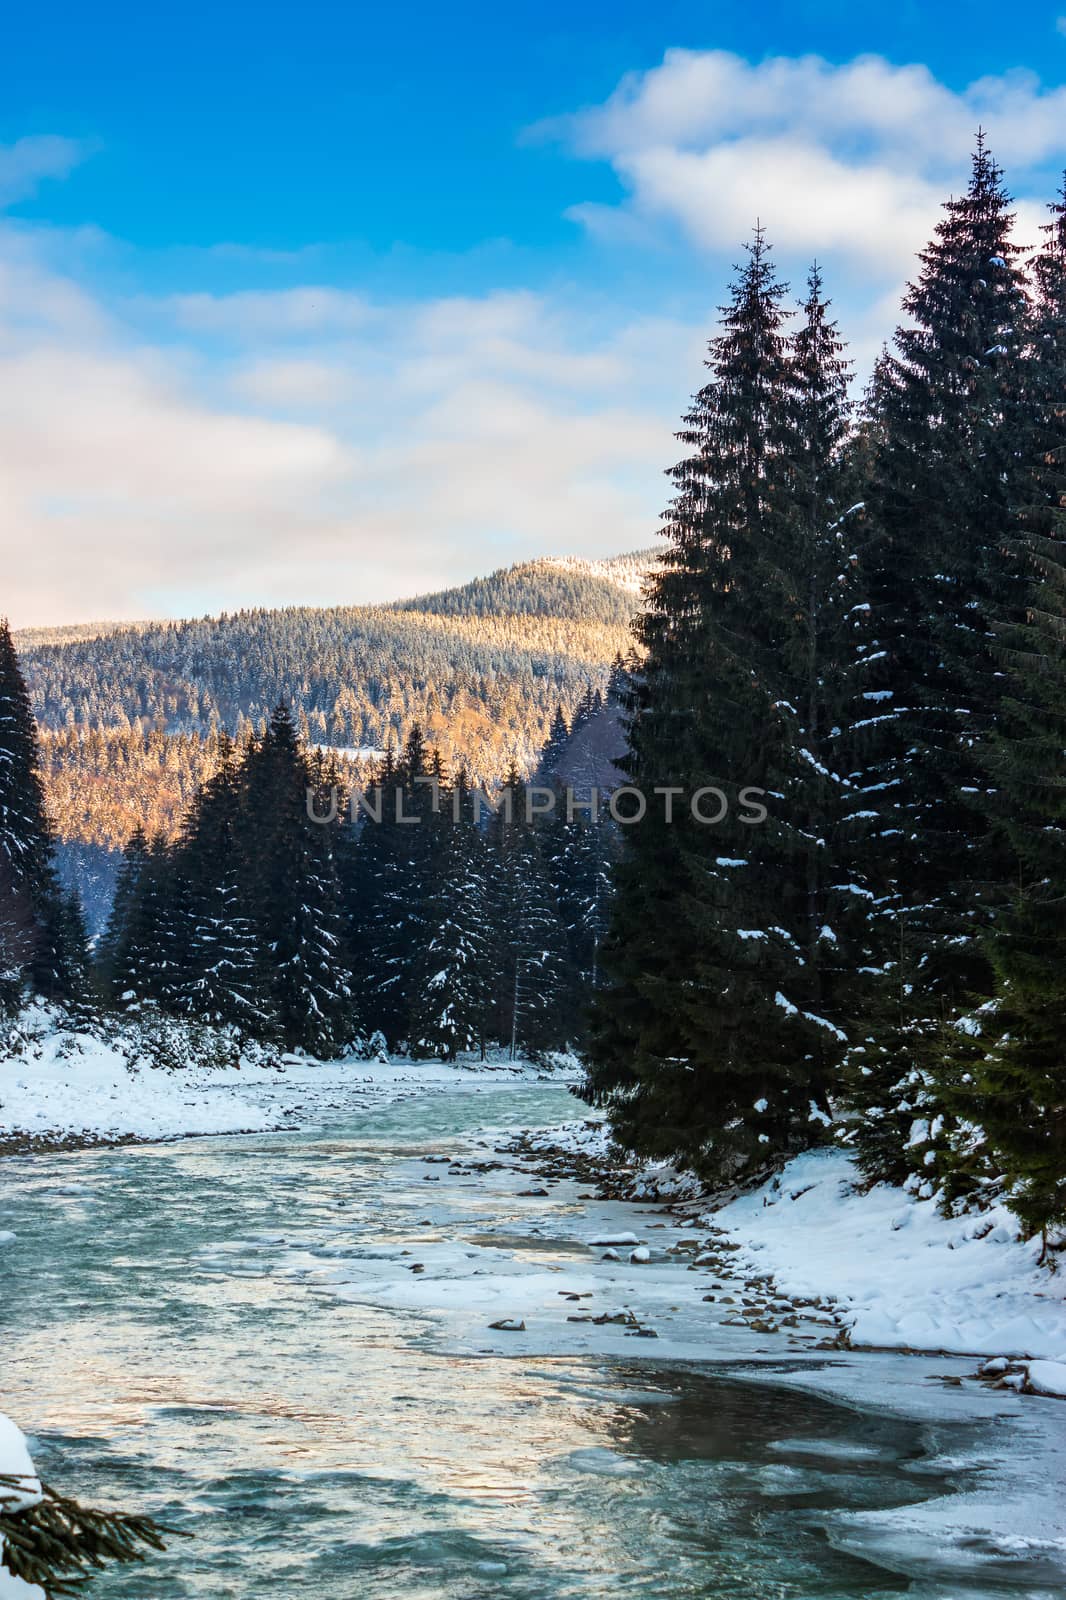 frozen river in forest by Pellinni